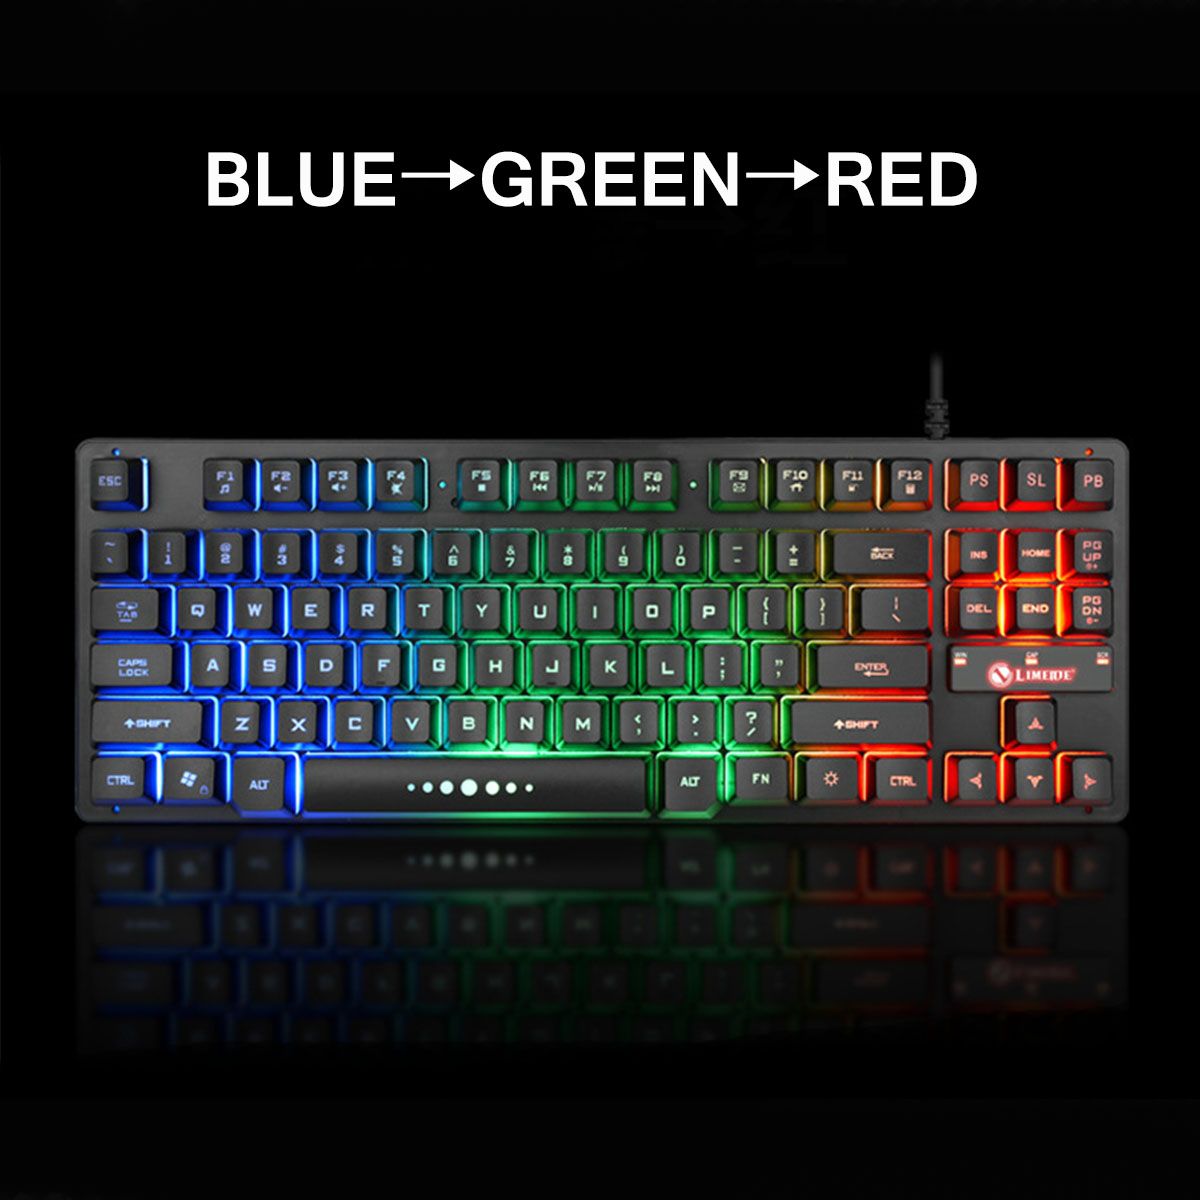 87-Key-USB-Wired-Gaming-Keyboard-LED-3-Sets-Breathing-Color-Backlight-For-Computer-Desktop-Notebook-1757833